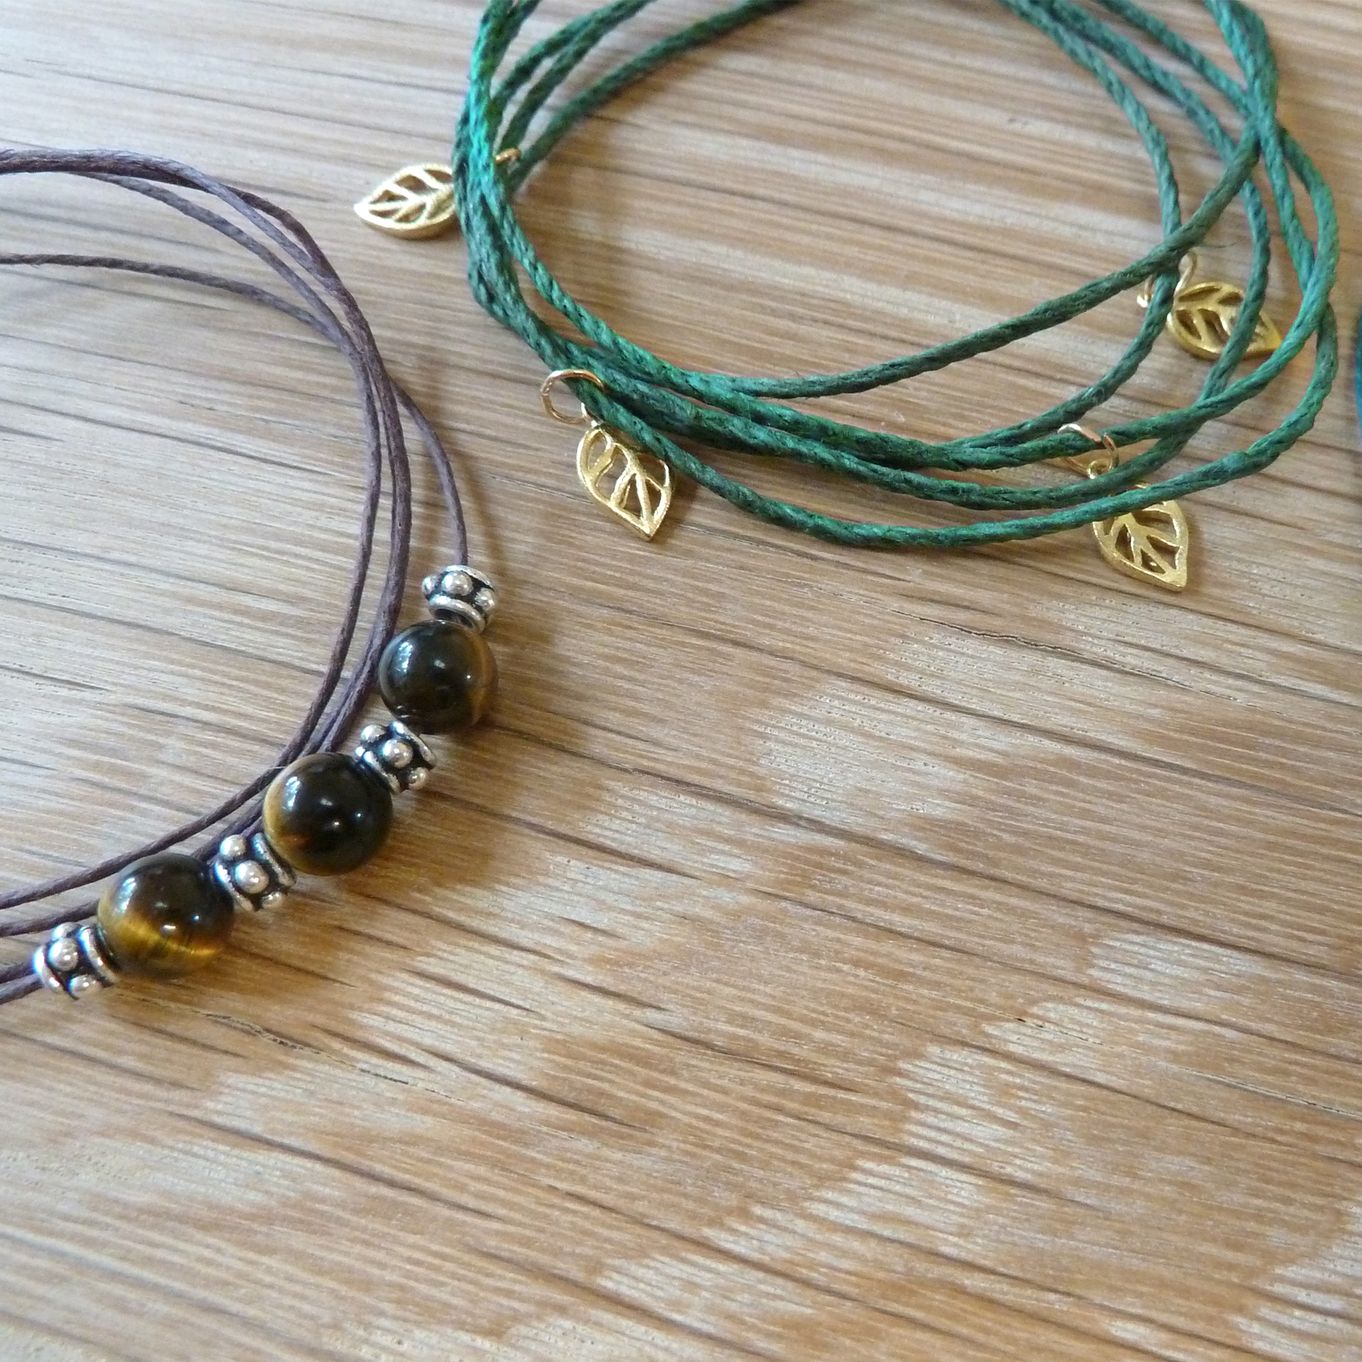 Seven Best Stringing Materials for Jewellery Making - FeltMagnet